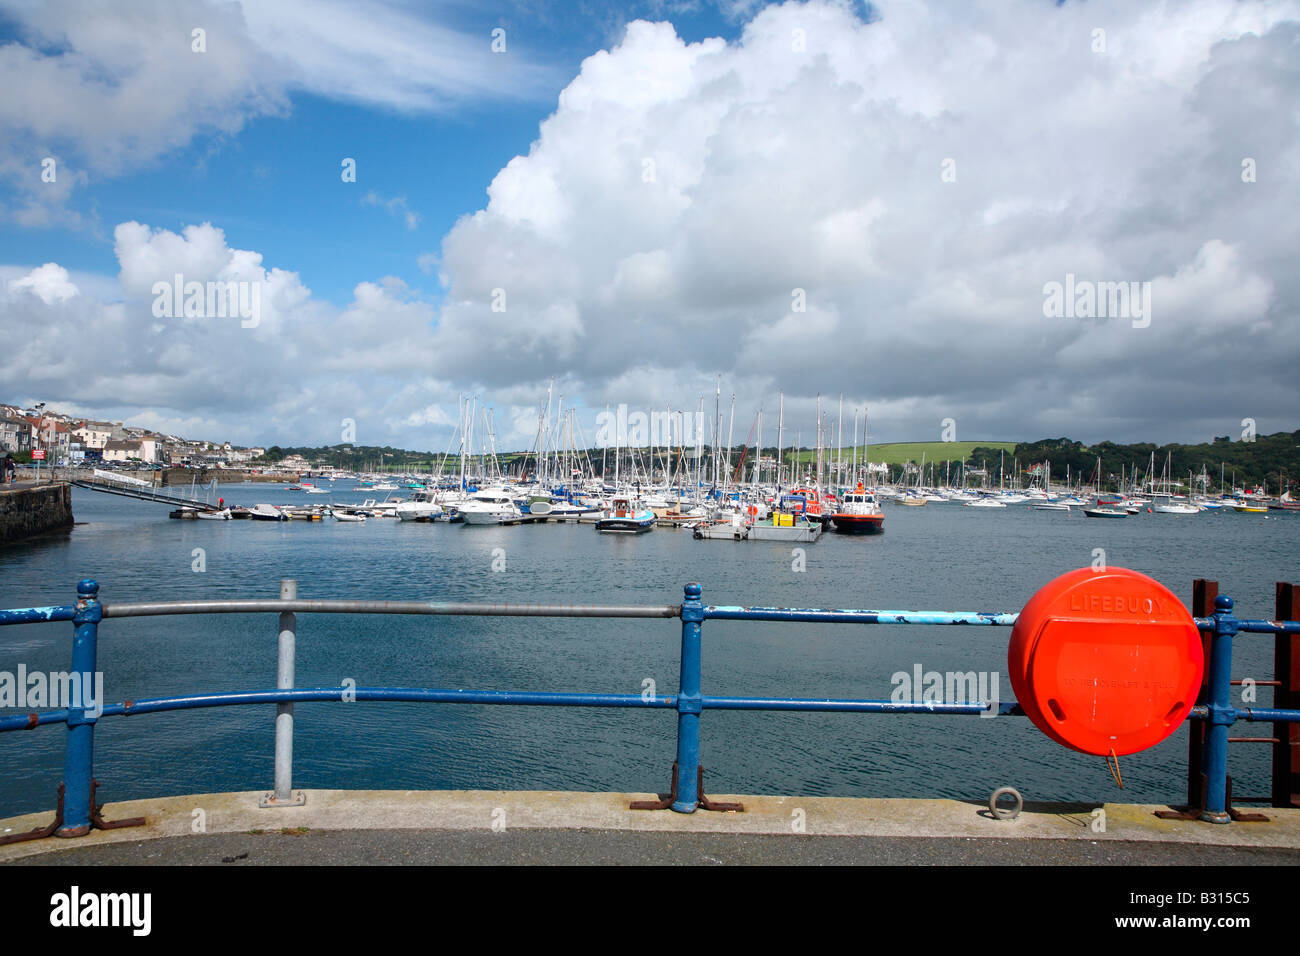 Mit Blick auf Boote vertäut am Fluss Fal in Falmouth, Cornwall UK Stockfoto